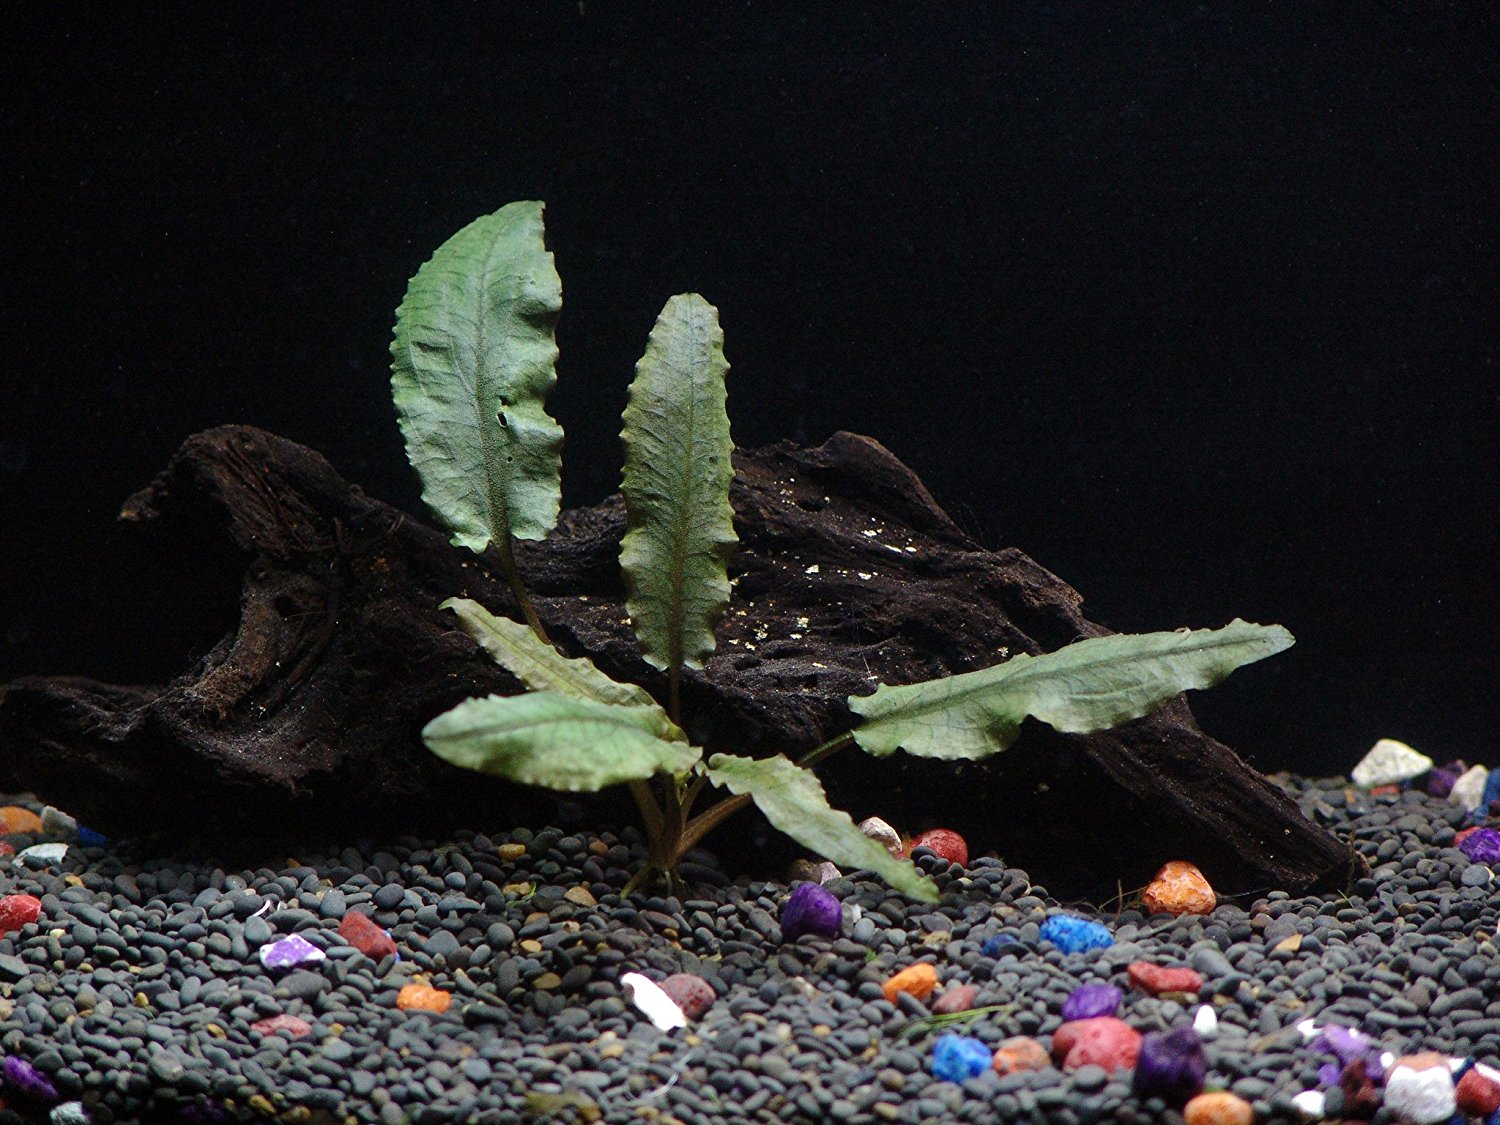 25+ Stems / 6 Species Live Aquarium Plants Package - Anacharis,  and More!